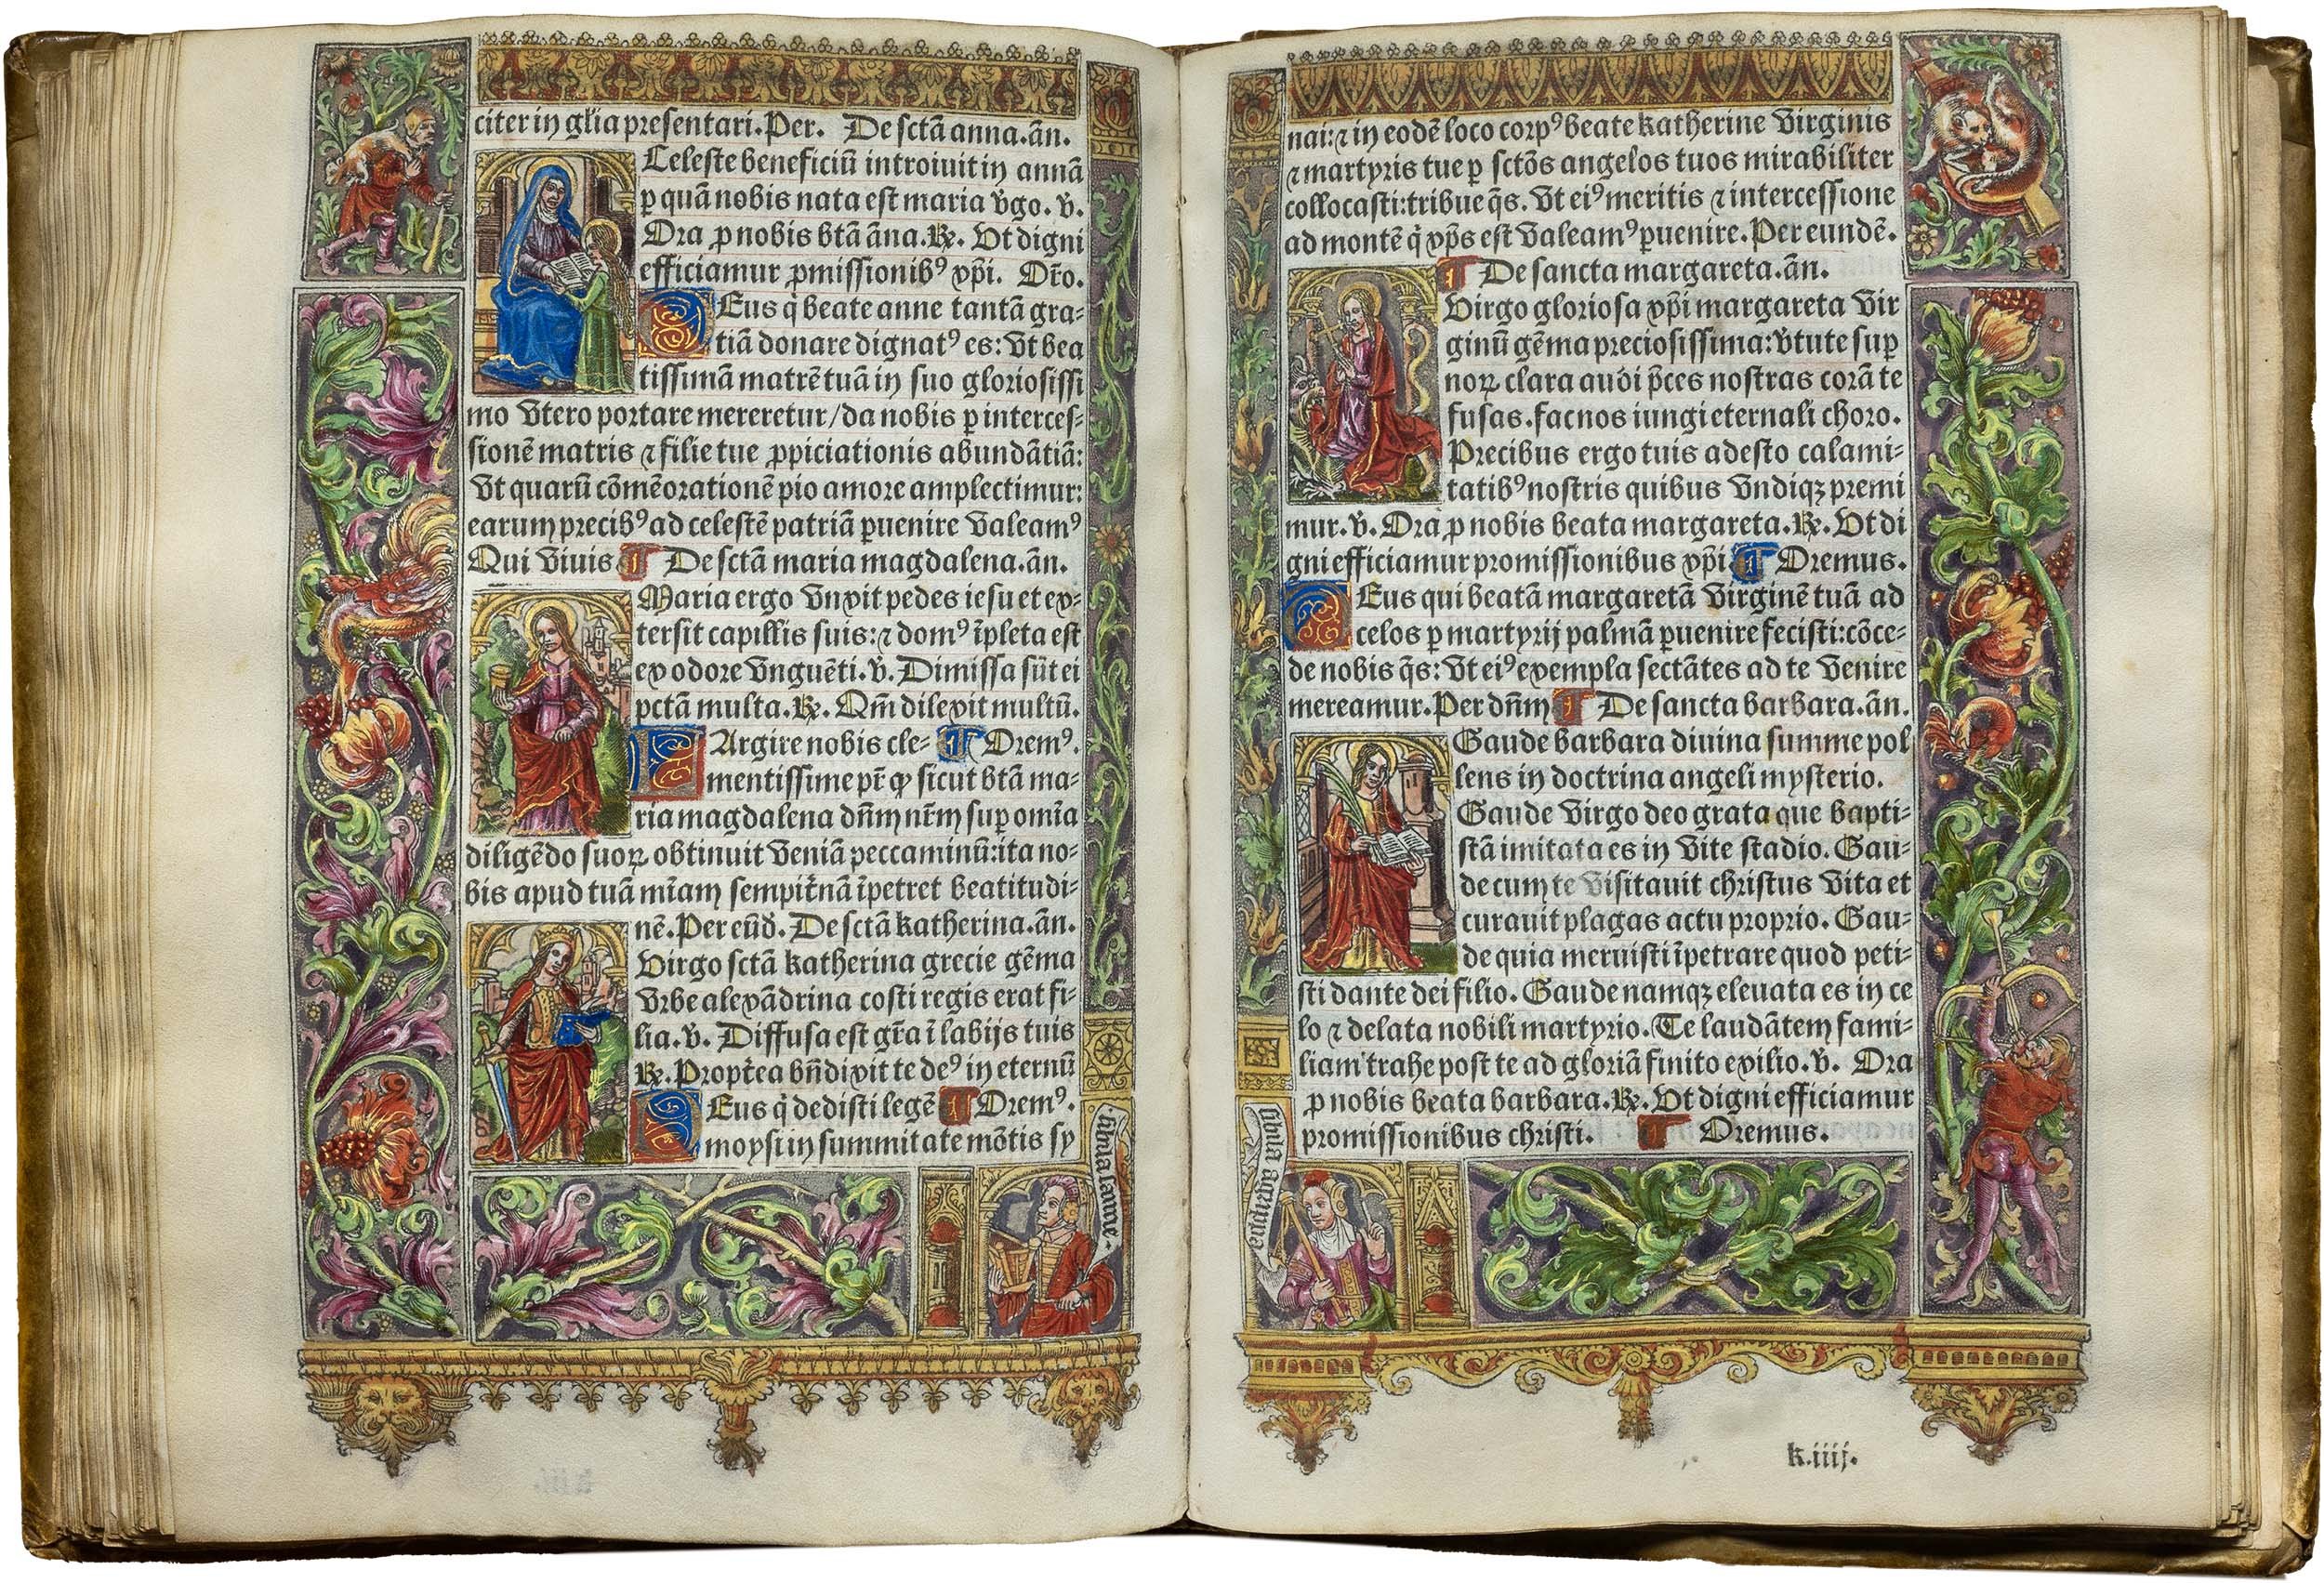 Horae-bmv-31-march-1511-kerver-printed-book-of-hours-illuminated-copy-vellum-80.jpg